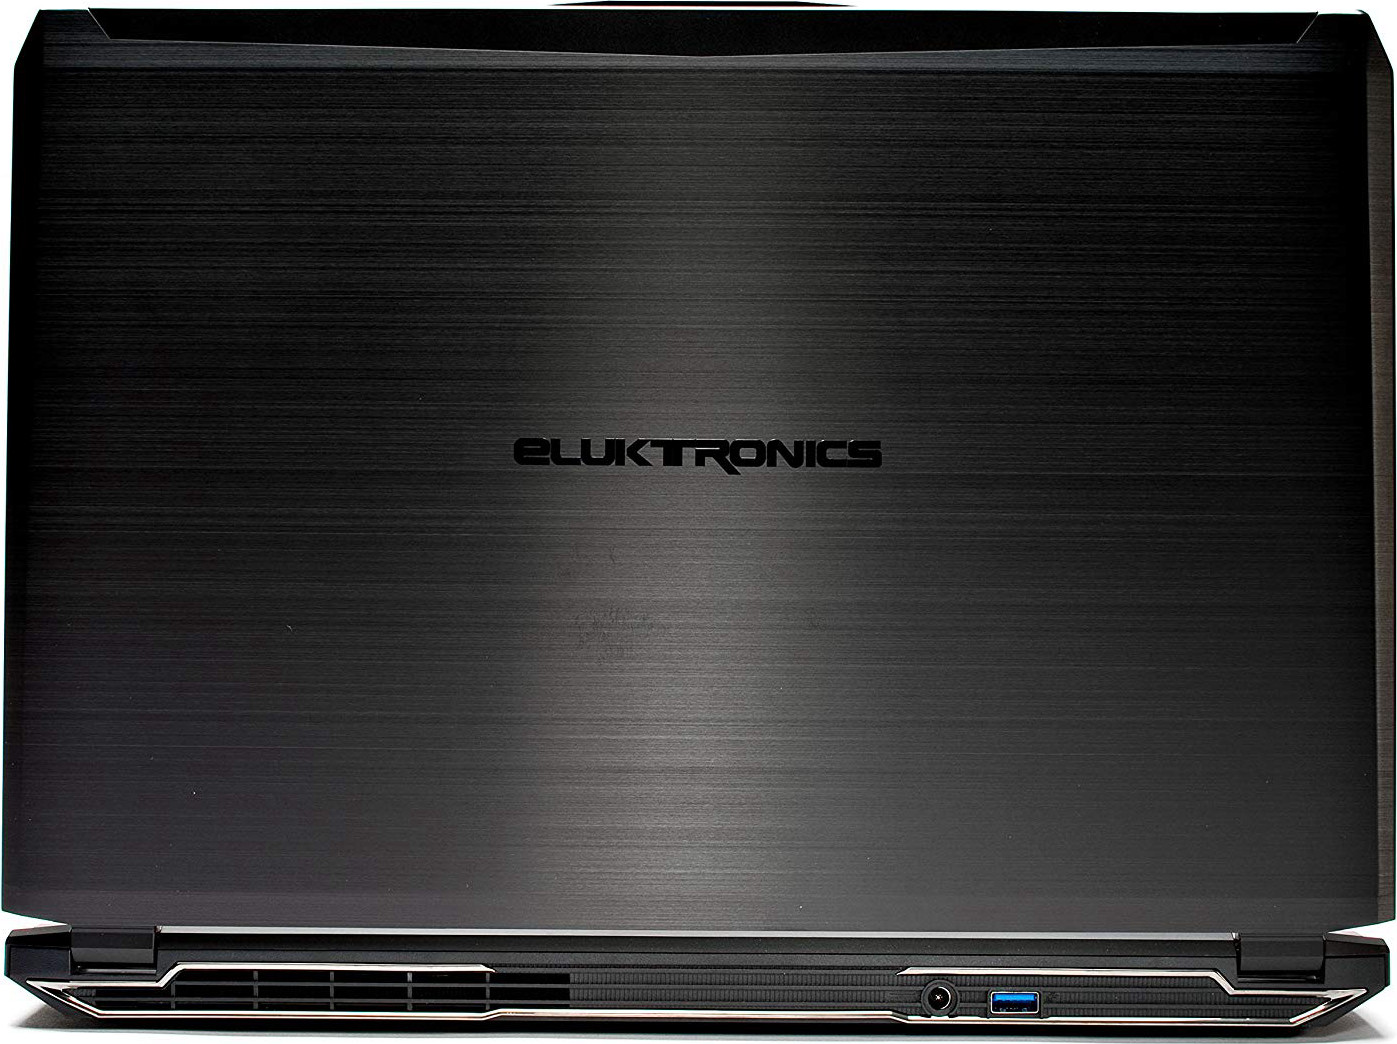 Eluktronics P650HP6 VR Ready Gaming Laptop - Intel Core i7-7700HQ Quad Core Windows 10 Home 6GB GDDR5 NVIDIA GeForce GTX 1060 15.6 Full HD IPS 512GB Performance SSD 16GB DDR4 RAM